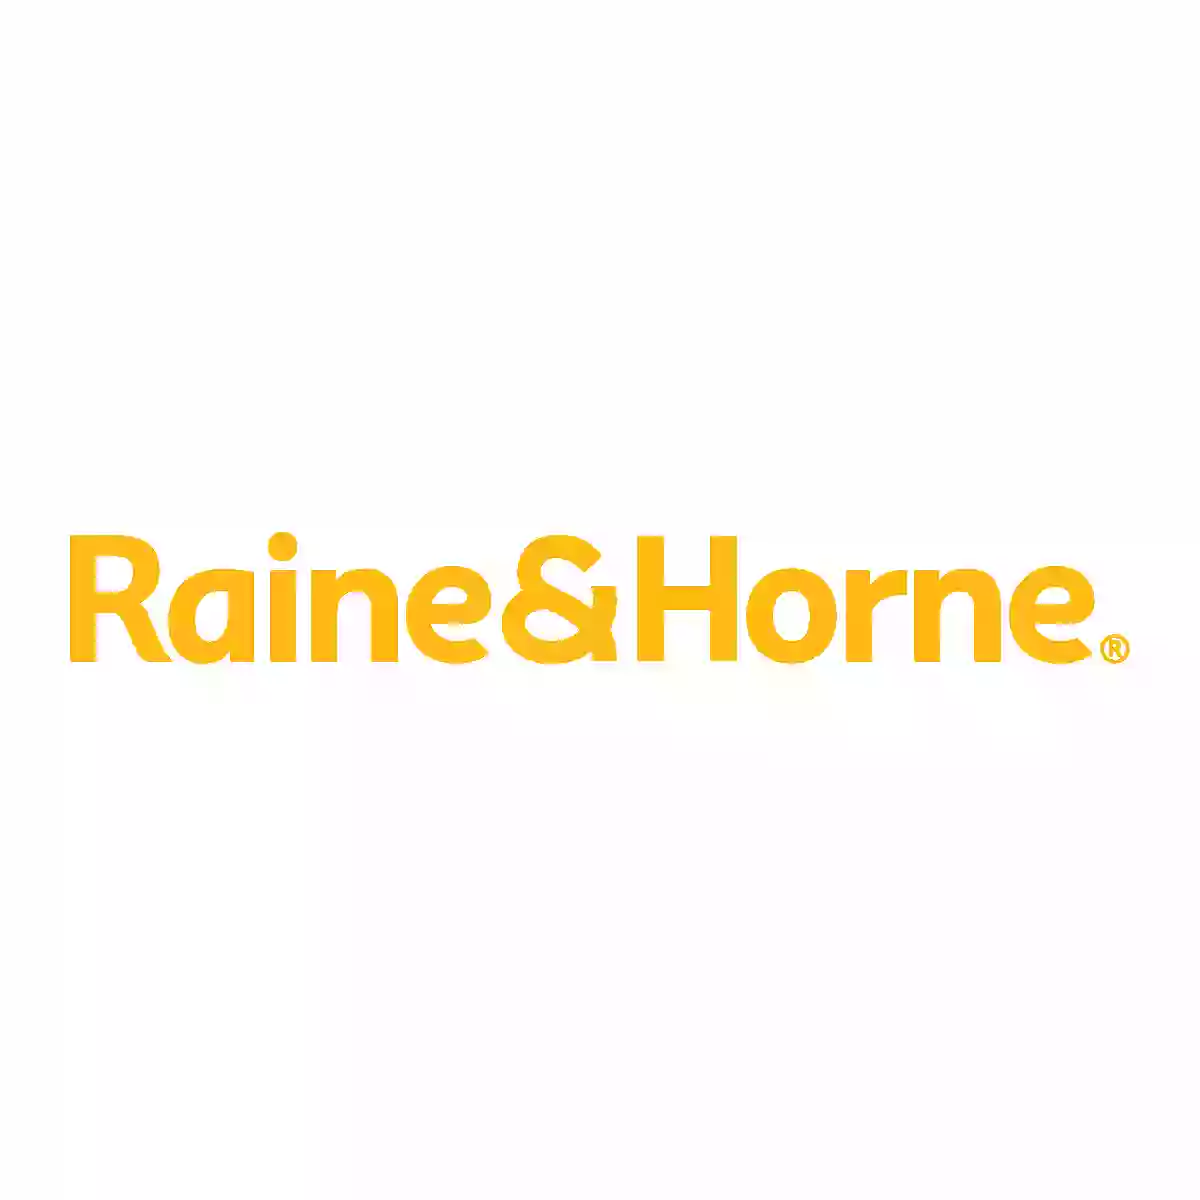 Raine & Horne Real Estate Mandurah